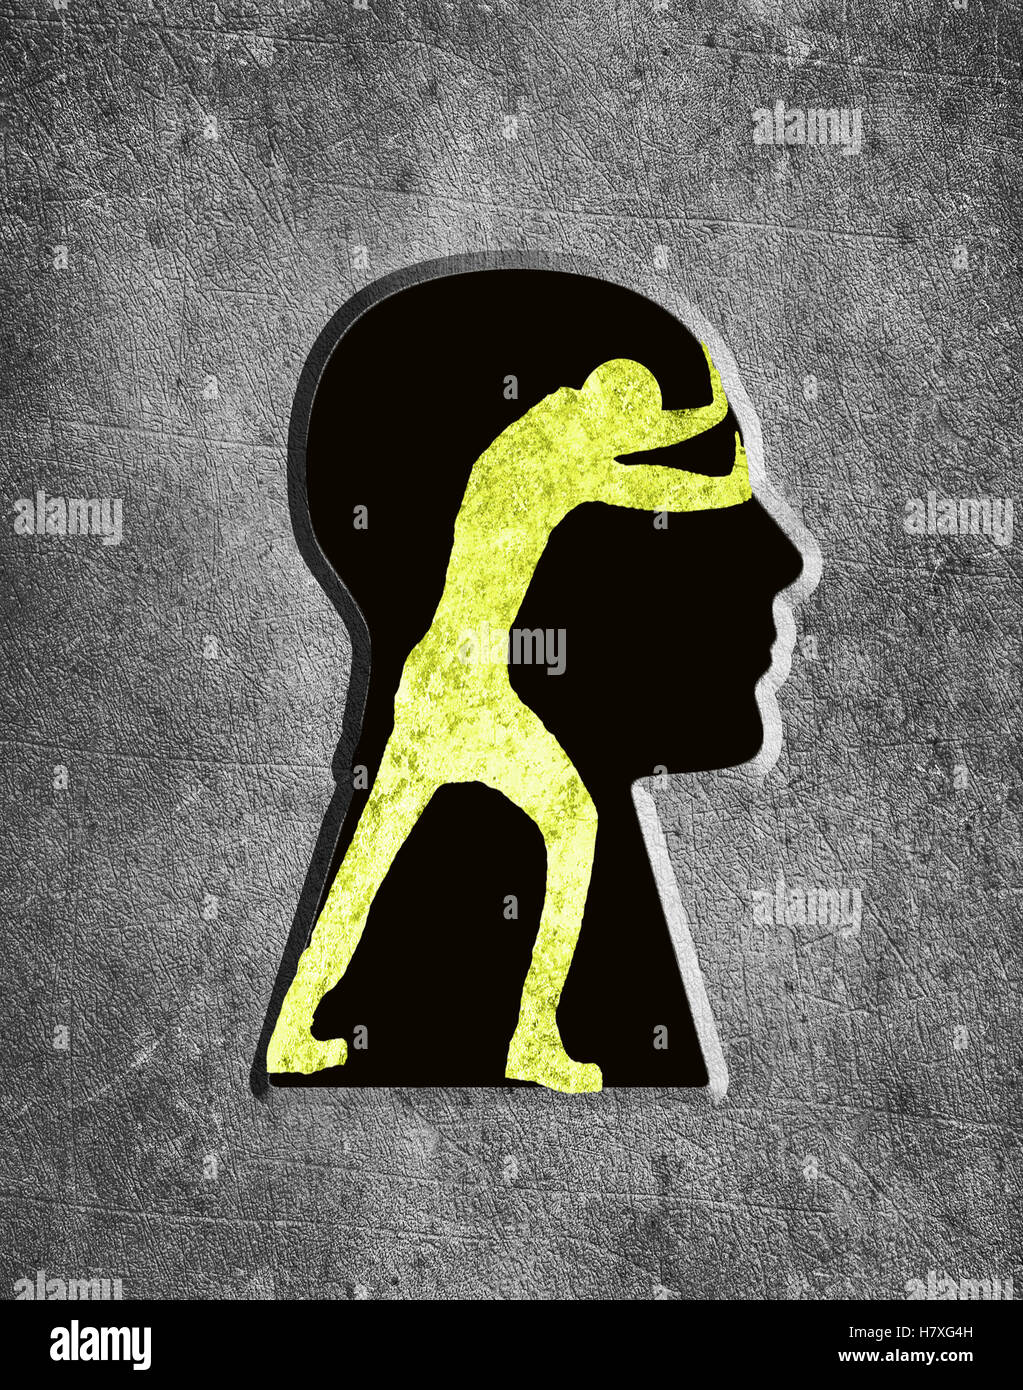 man inside me psychology concept digital illustration Stock Photo